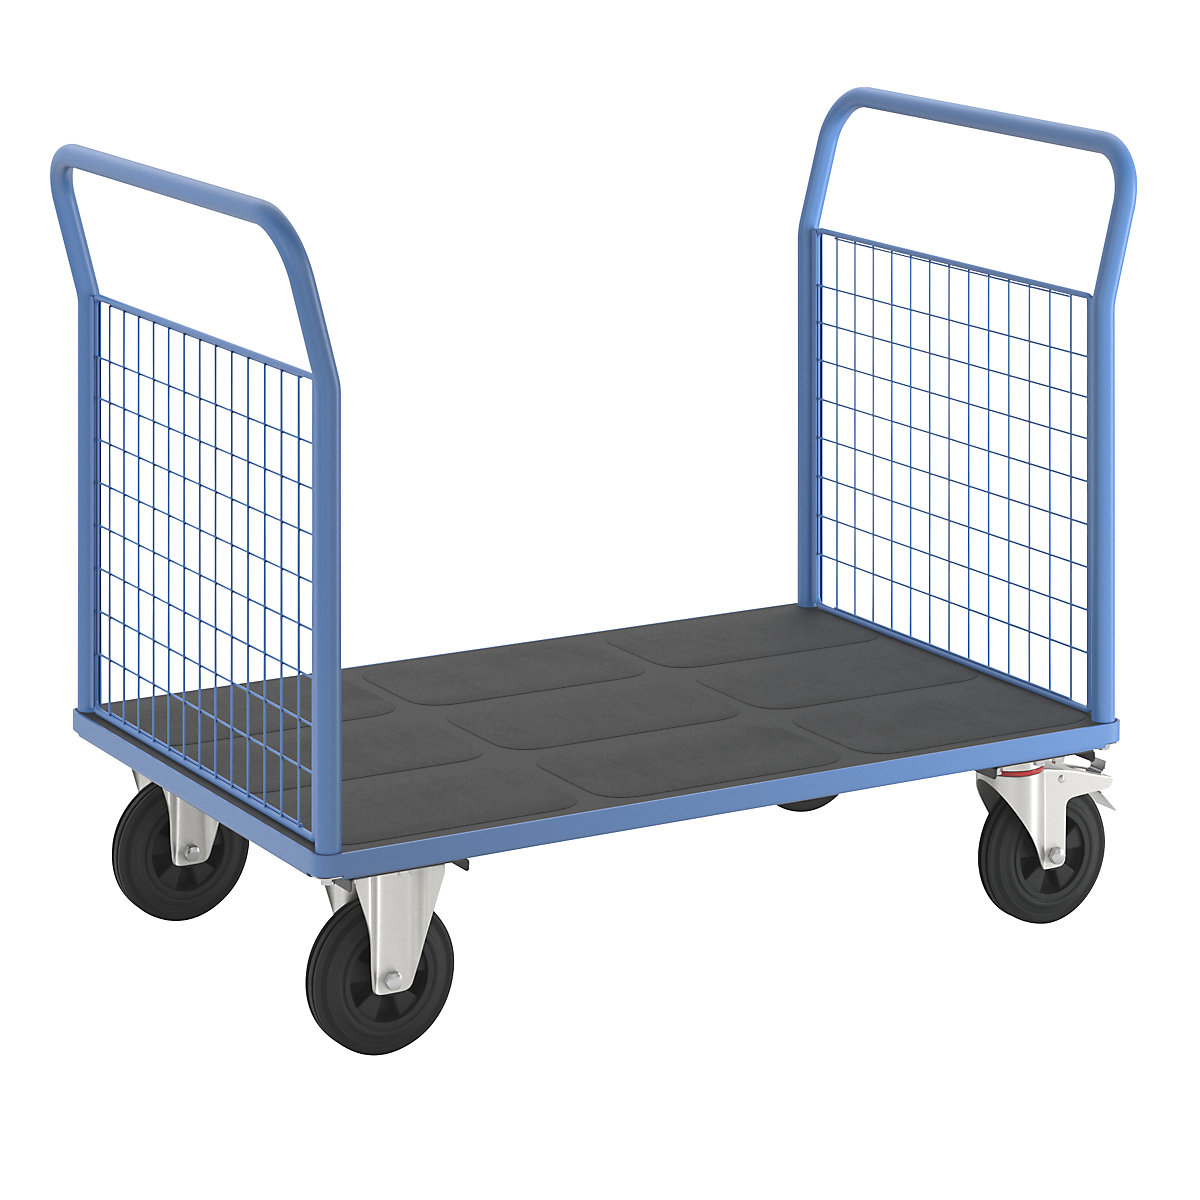 Ploski voziček – eurokraft pro